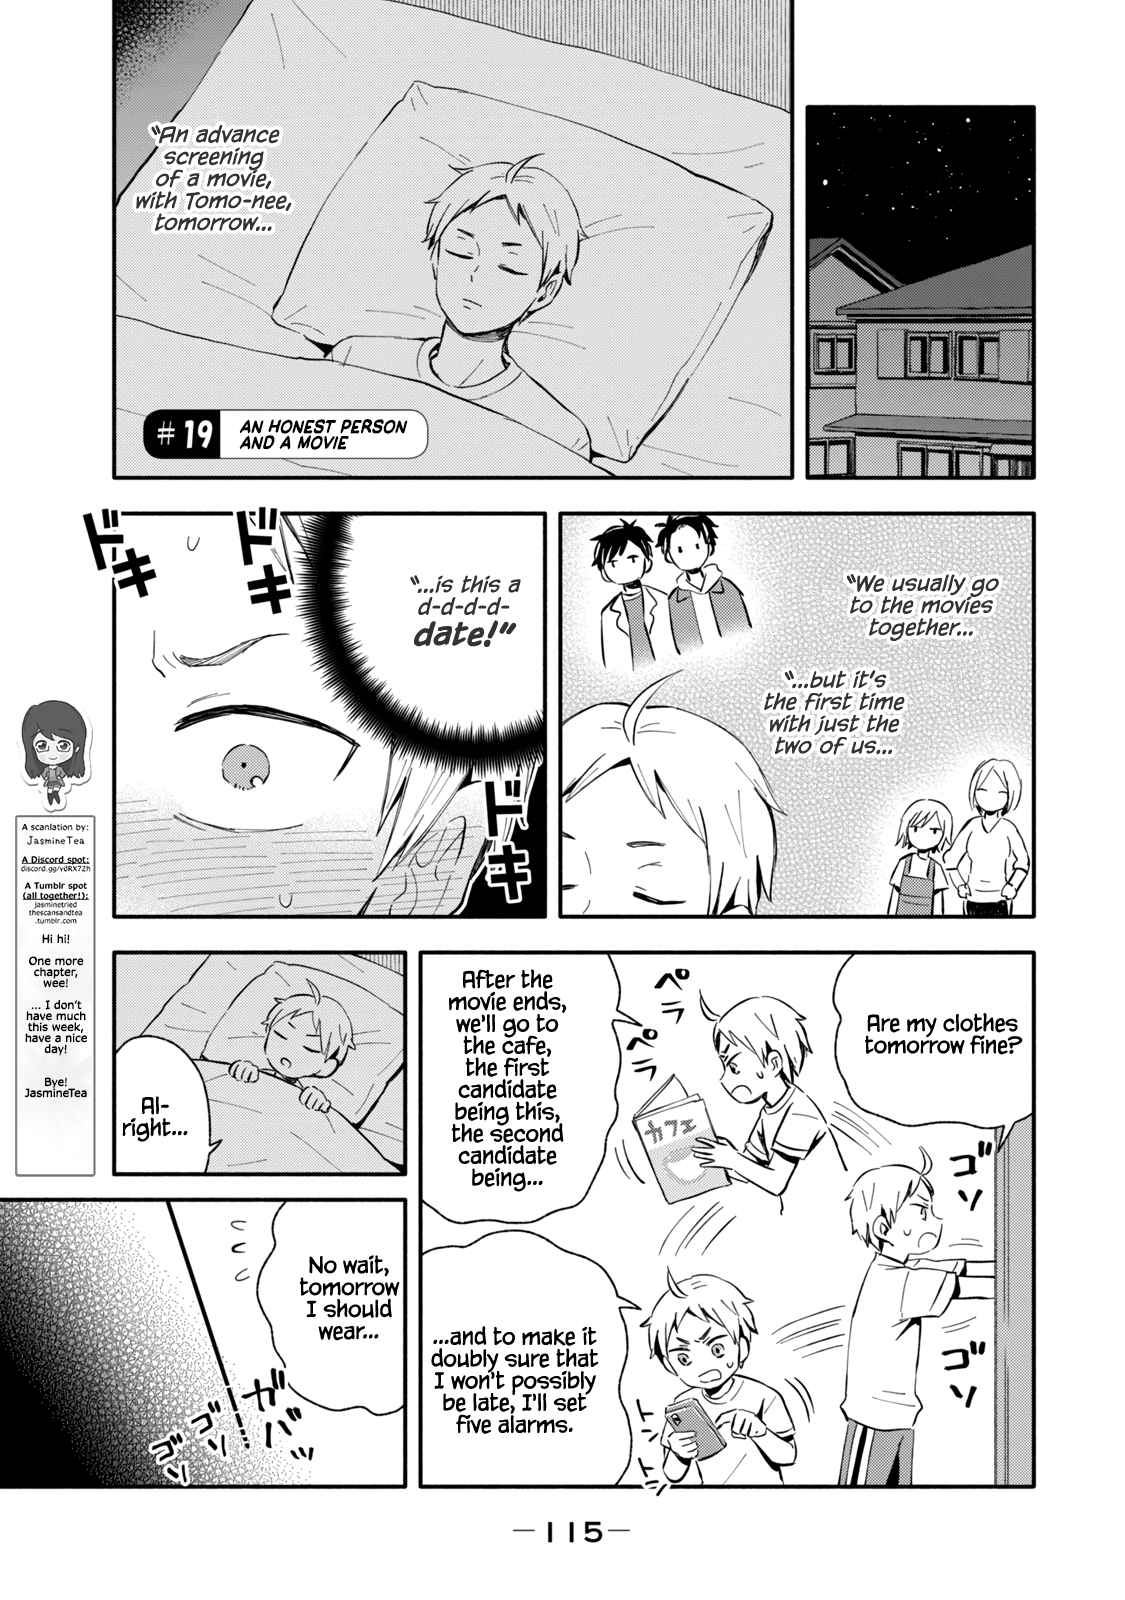 Ookiku Nattara Kekkon Suru! Vol. 1 Ch. 19 An Honest Person and A Movie